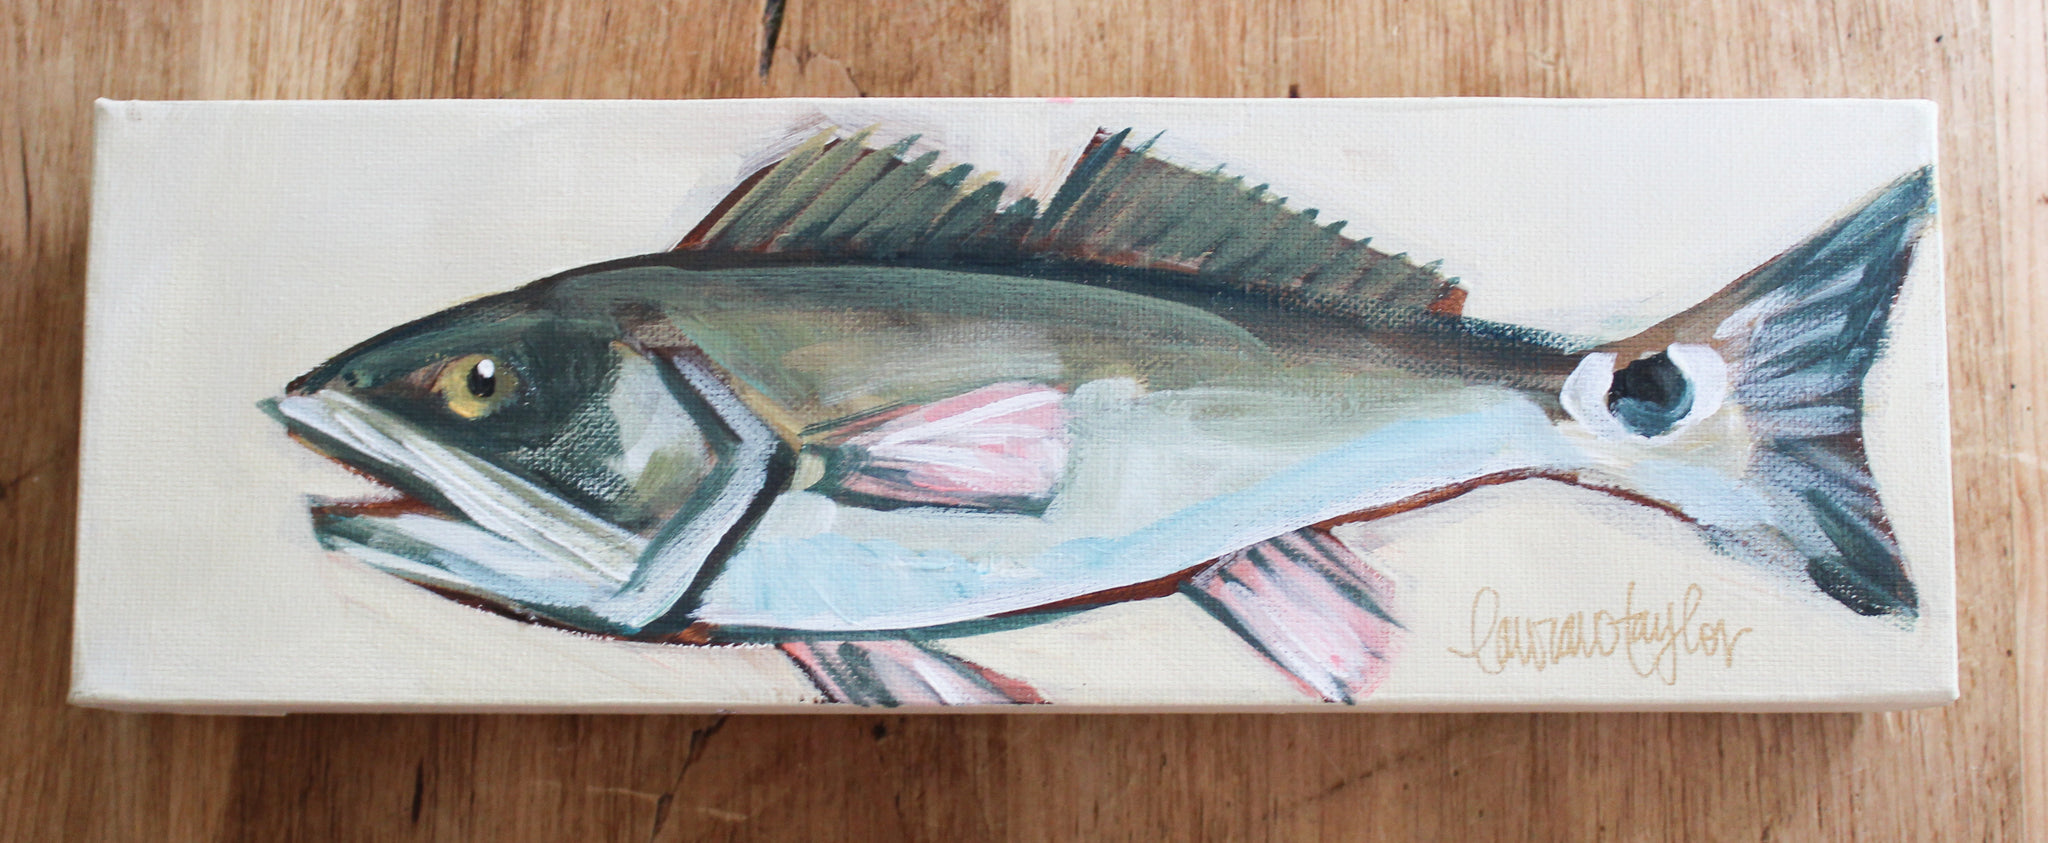 4x12 Fish on Canvas